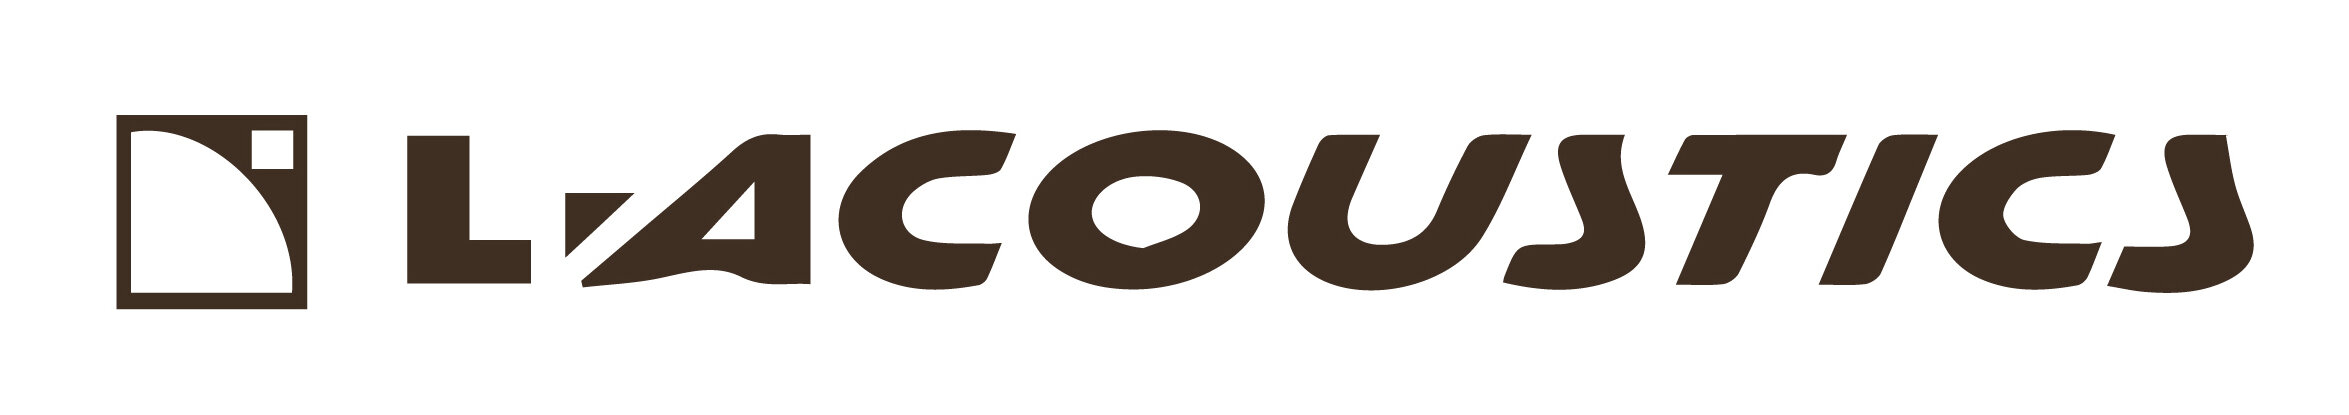 Lacoustic brown logo.jpg